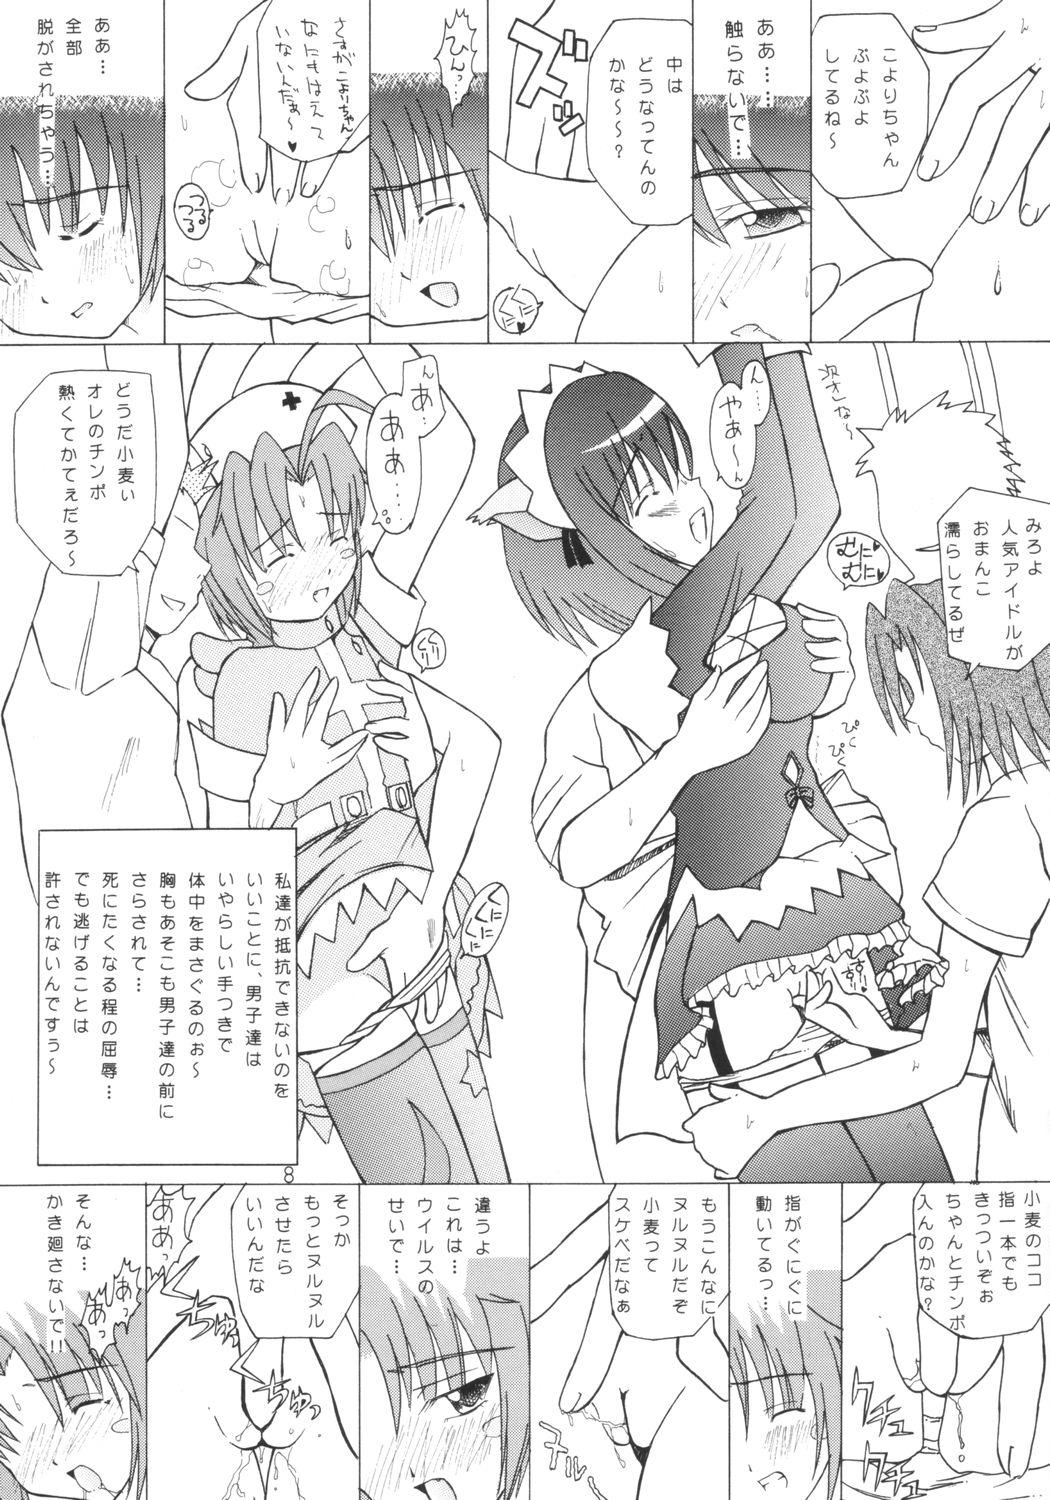 Stunning Komugi Channel - Nurse witch komugi Ex Girlfriends - Page 7